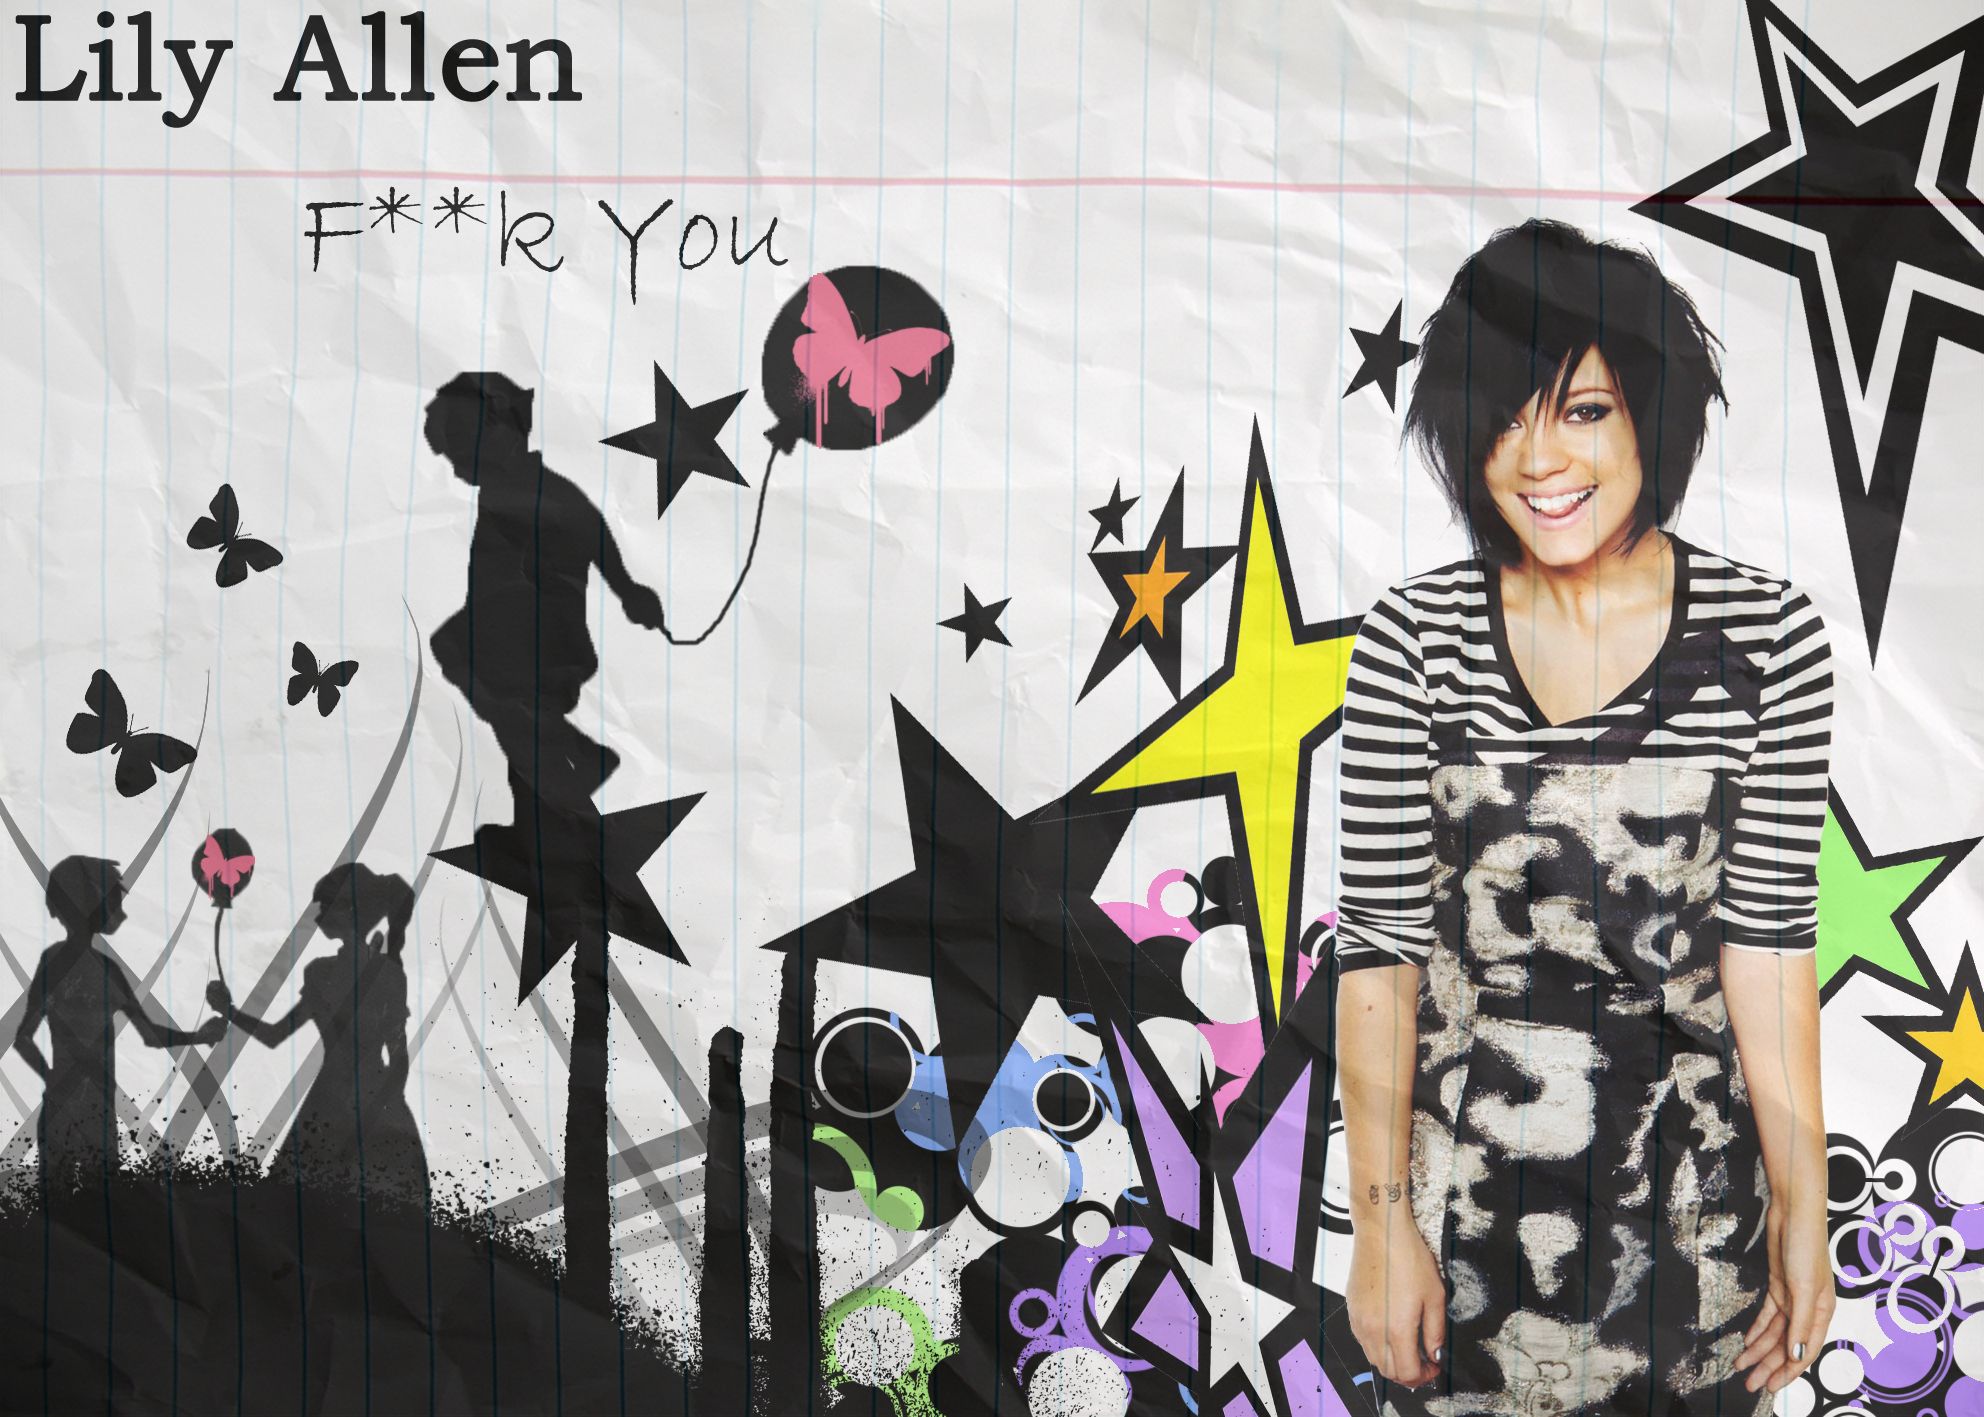 Lily Allen FUCK YOU Wallpaper - Lily Allen Photo (11905883) - Fanpop